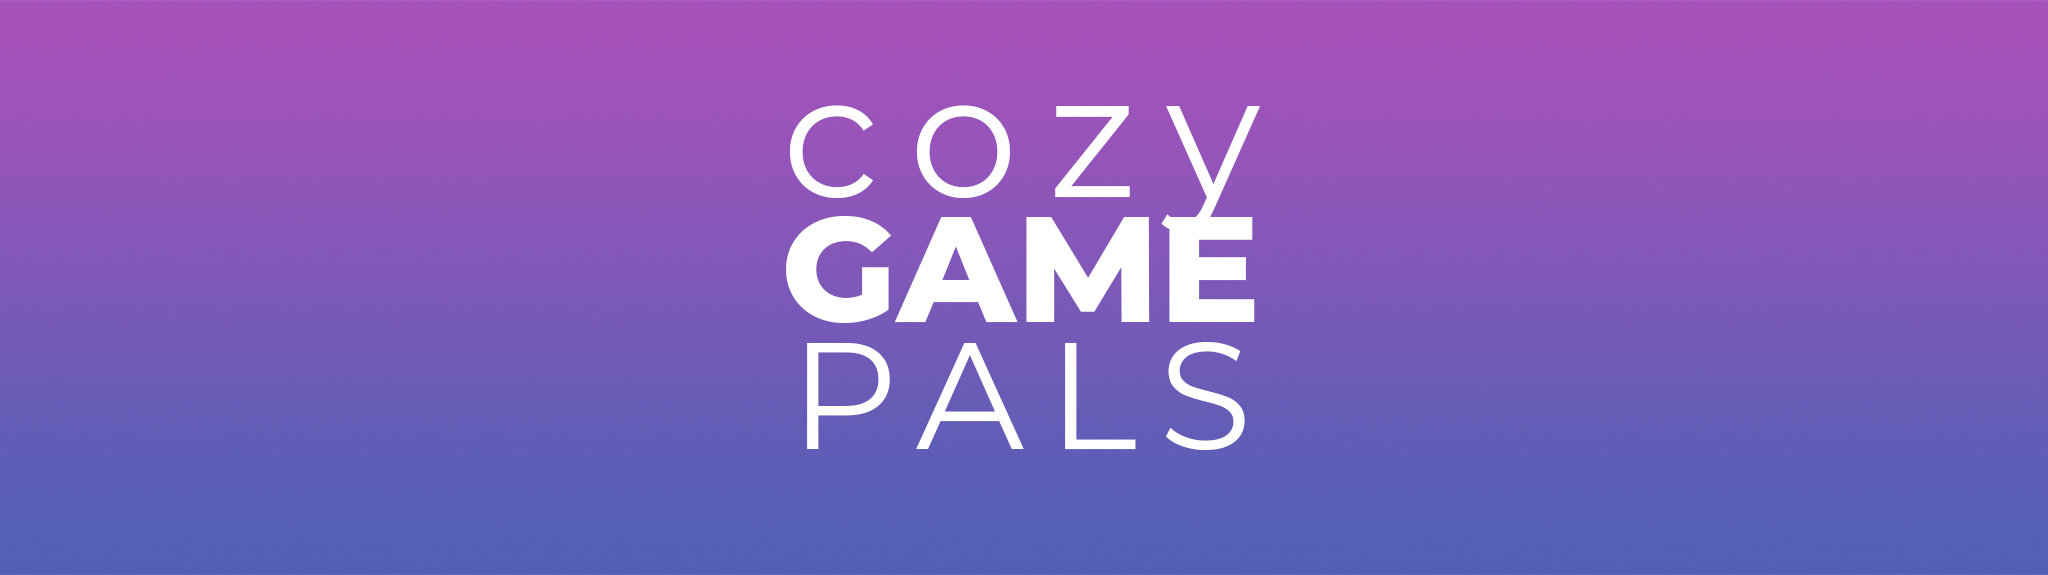 Cozy Game Pals - itch.io